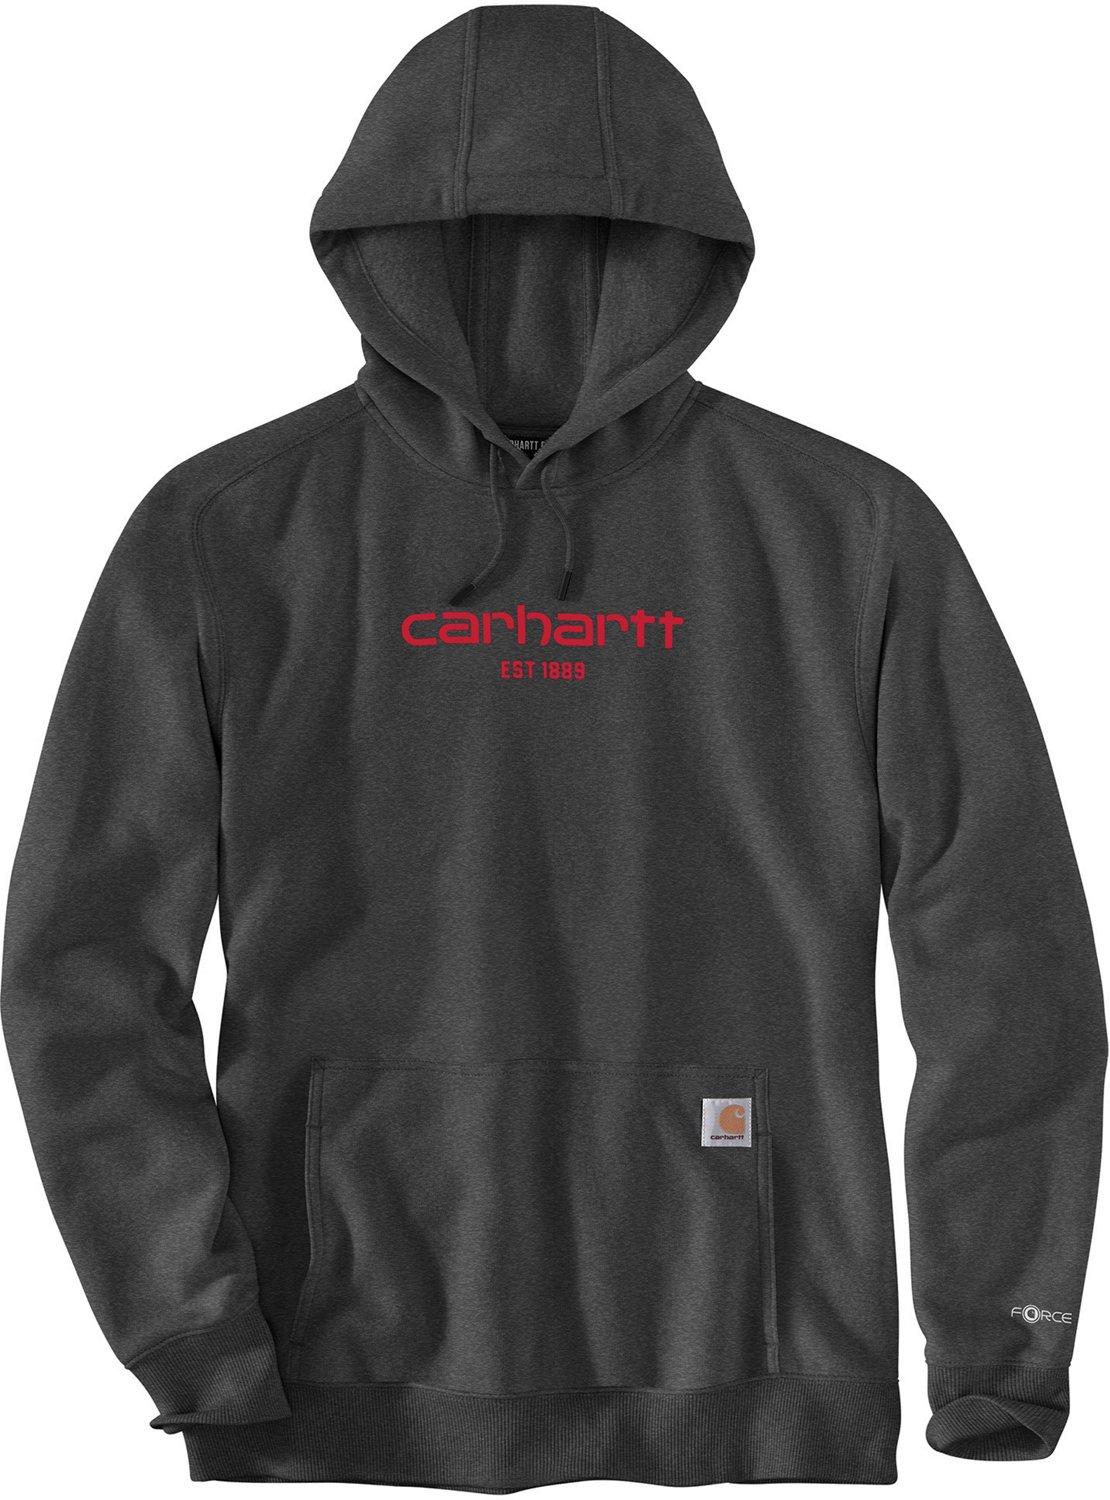 Carhartt Men's Texas Midweight Graphic Sweatshirt